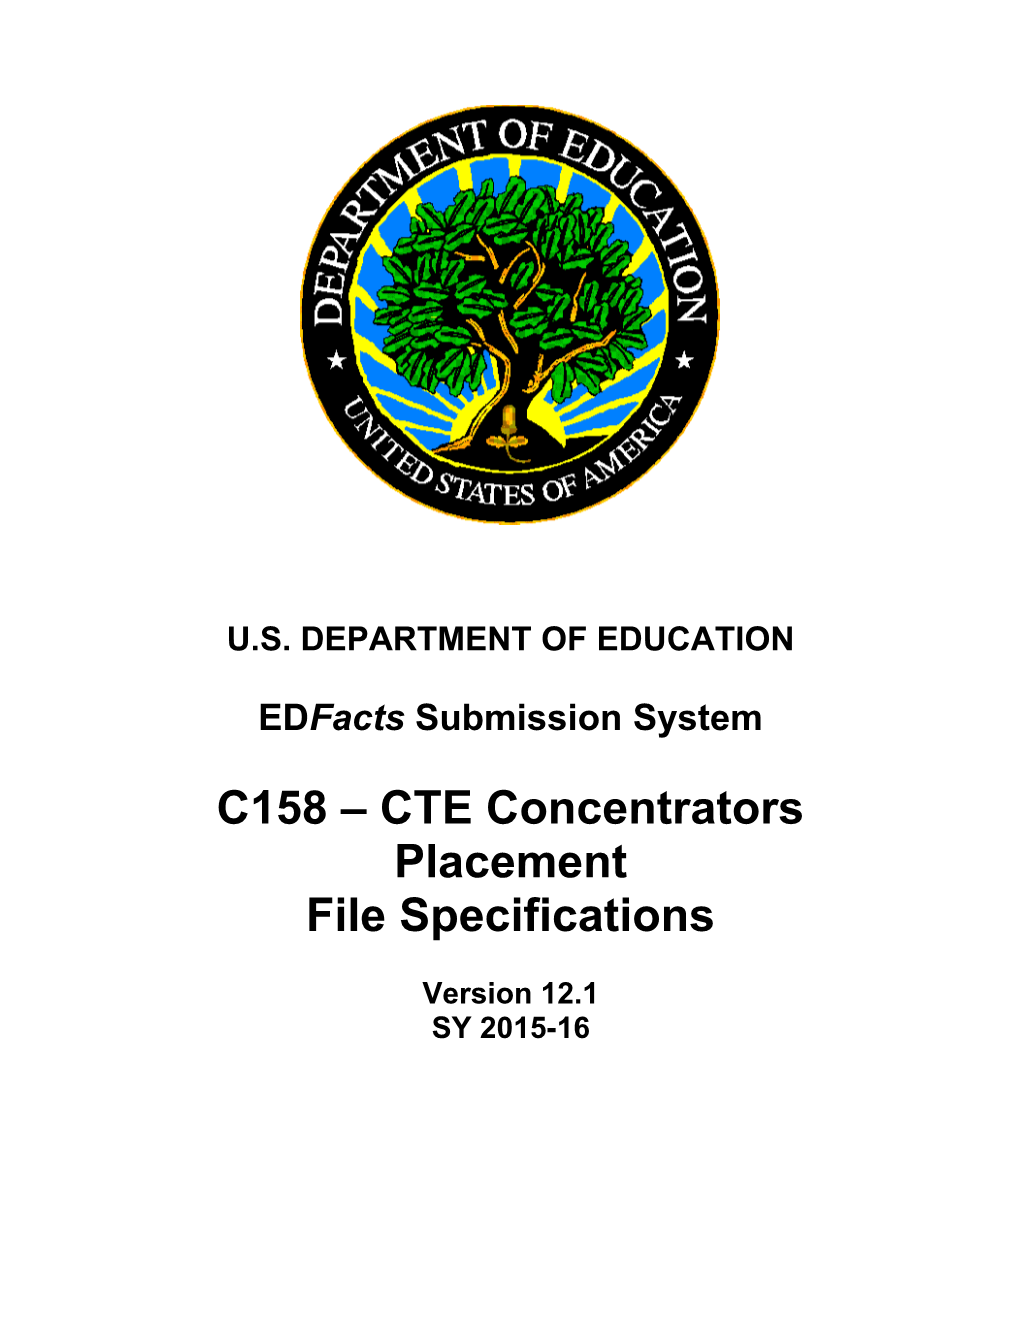 CTE Concentrators Placement File Specification (Msword)